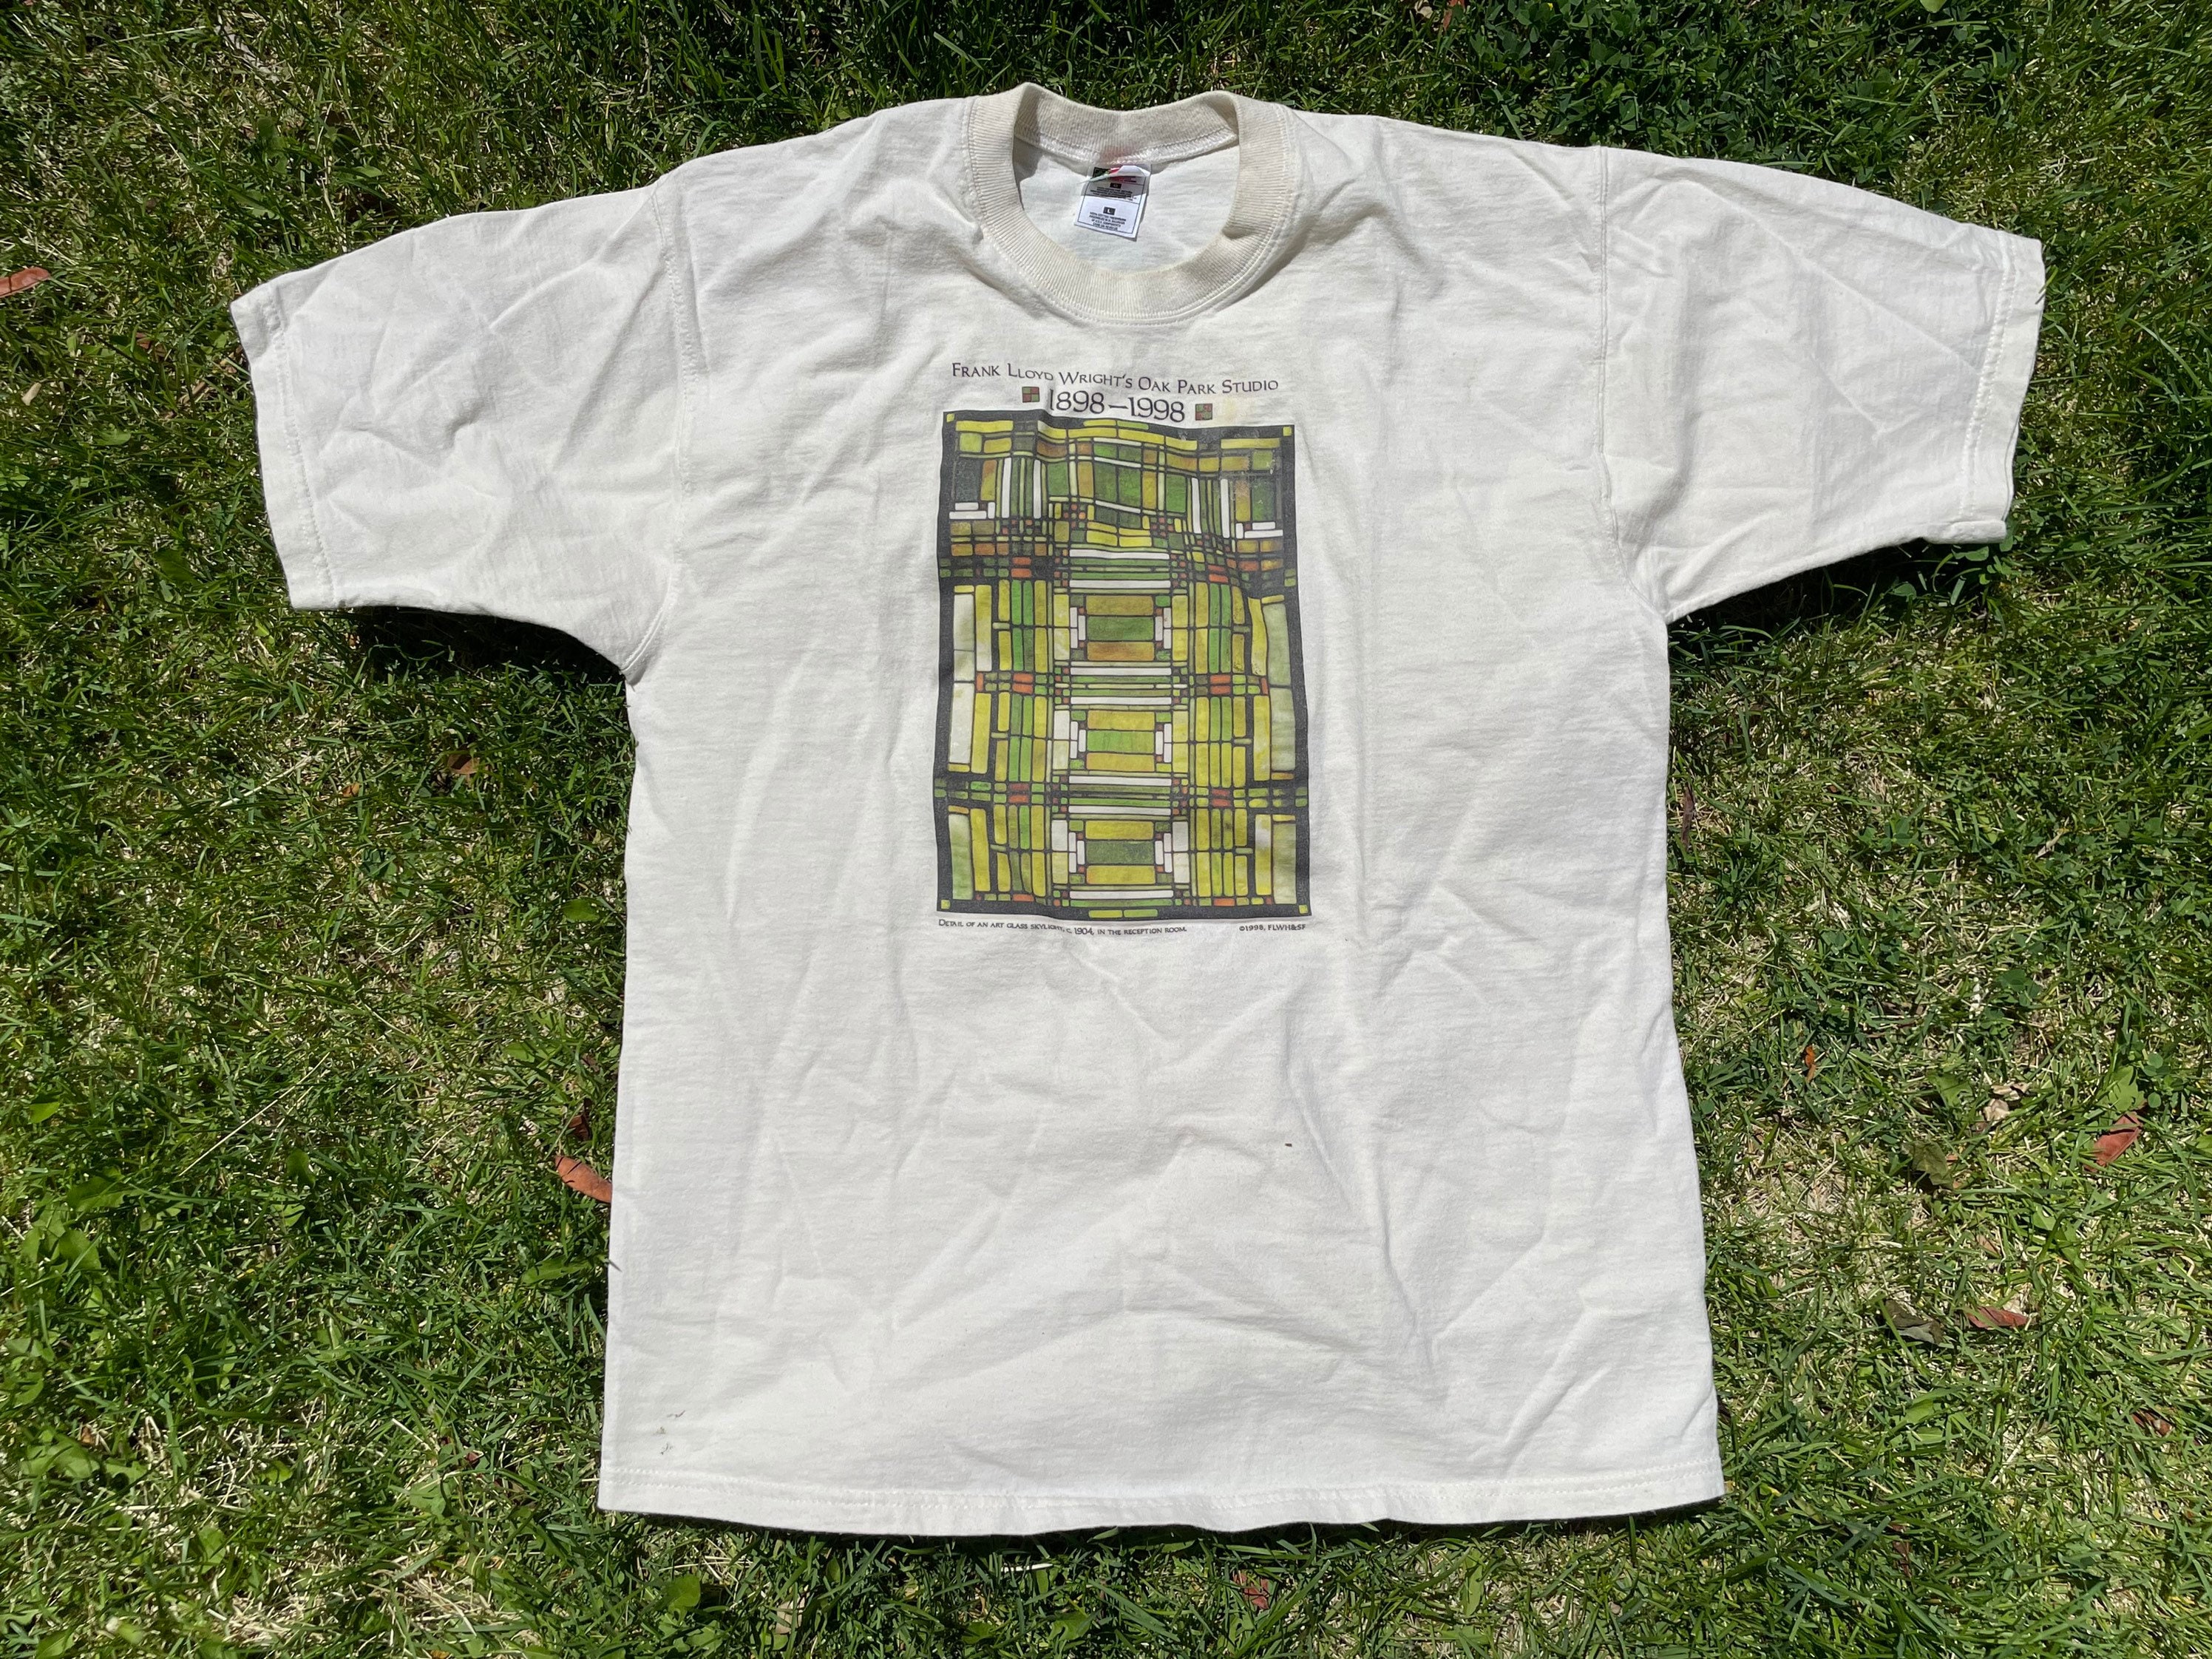 Vtg 1998 Frank Lloyd Wright's Oak Park Studio 1898-1998 Printed T-shirt 